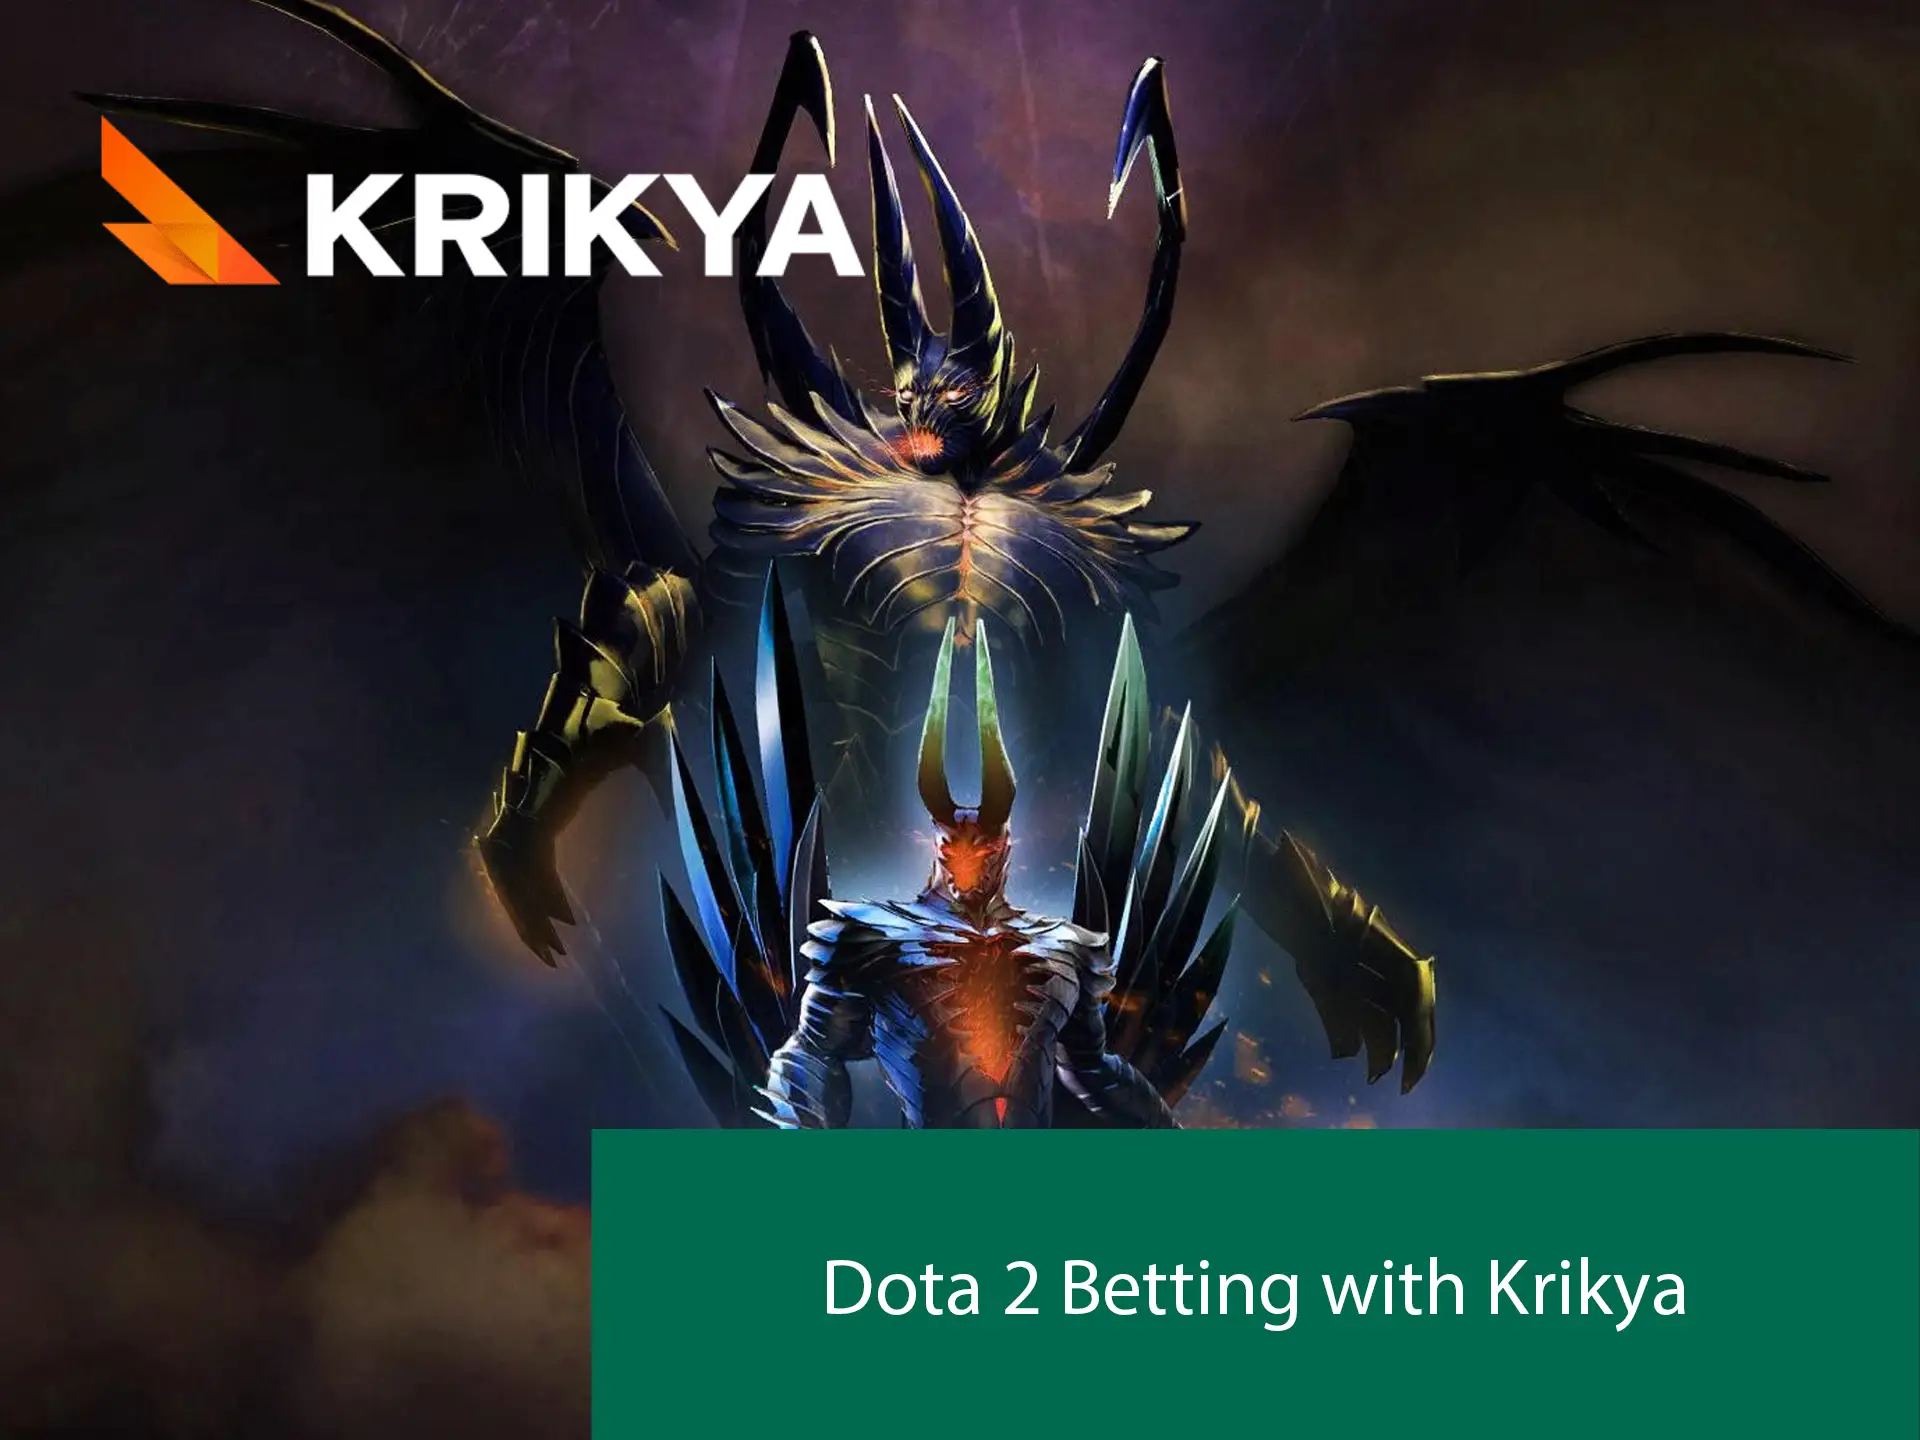 Krikya bettors can bet on Dota 2 at The International Championship.